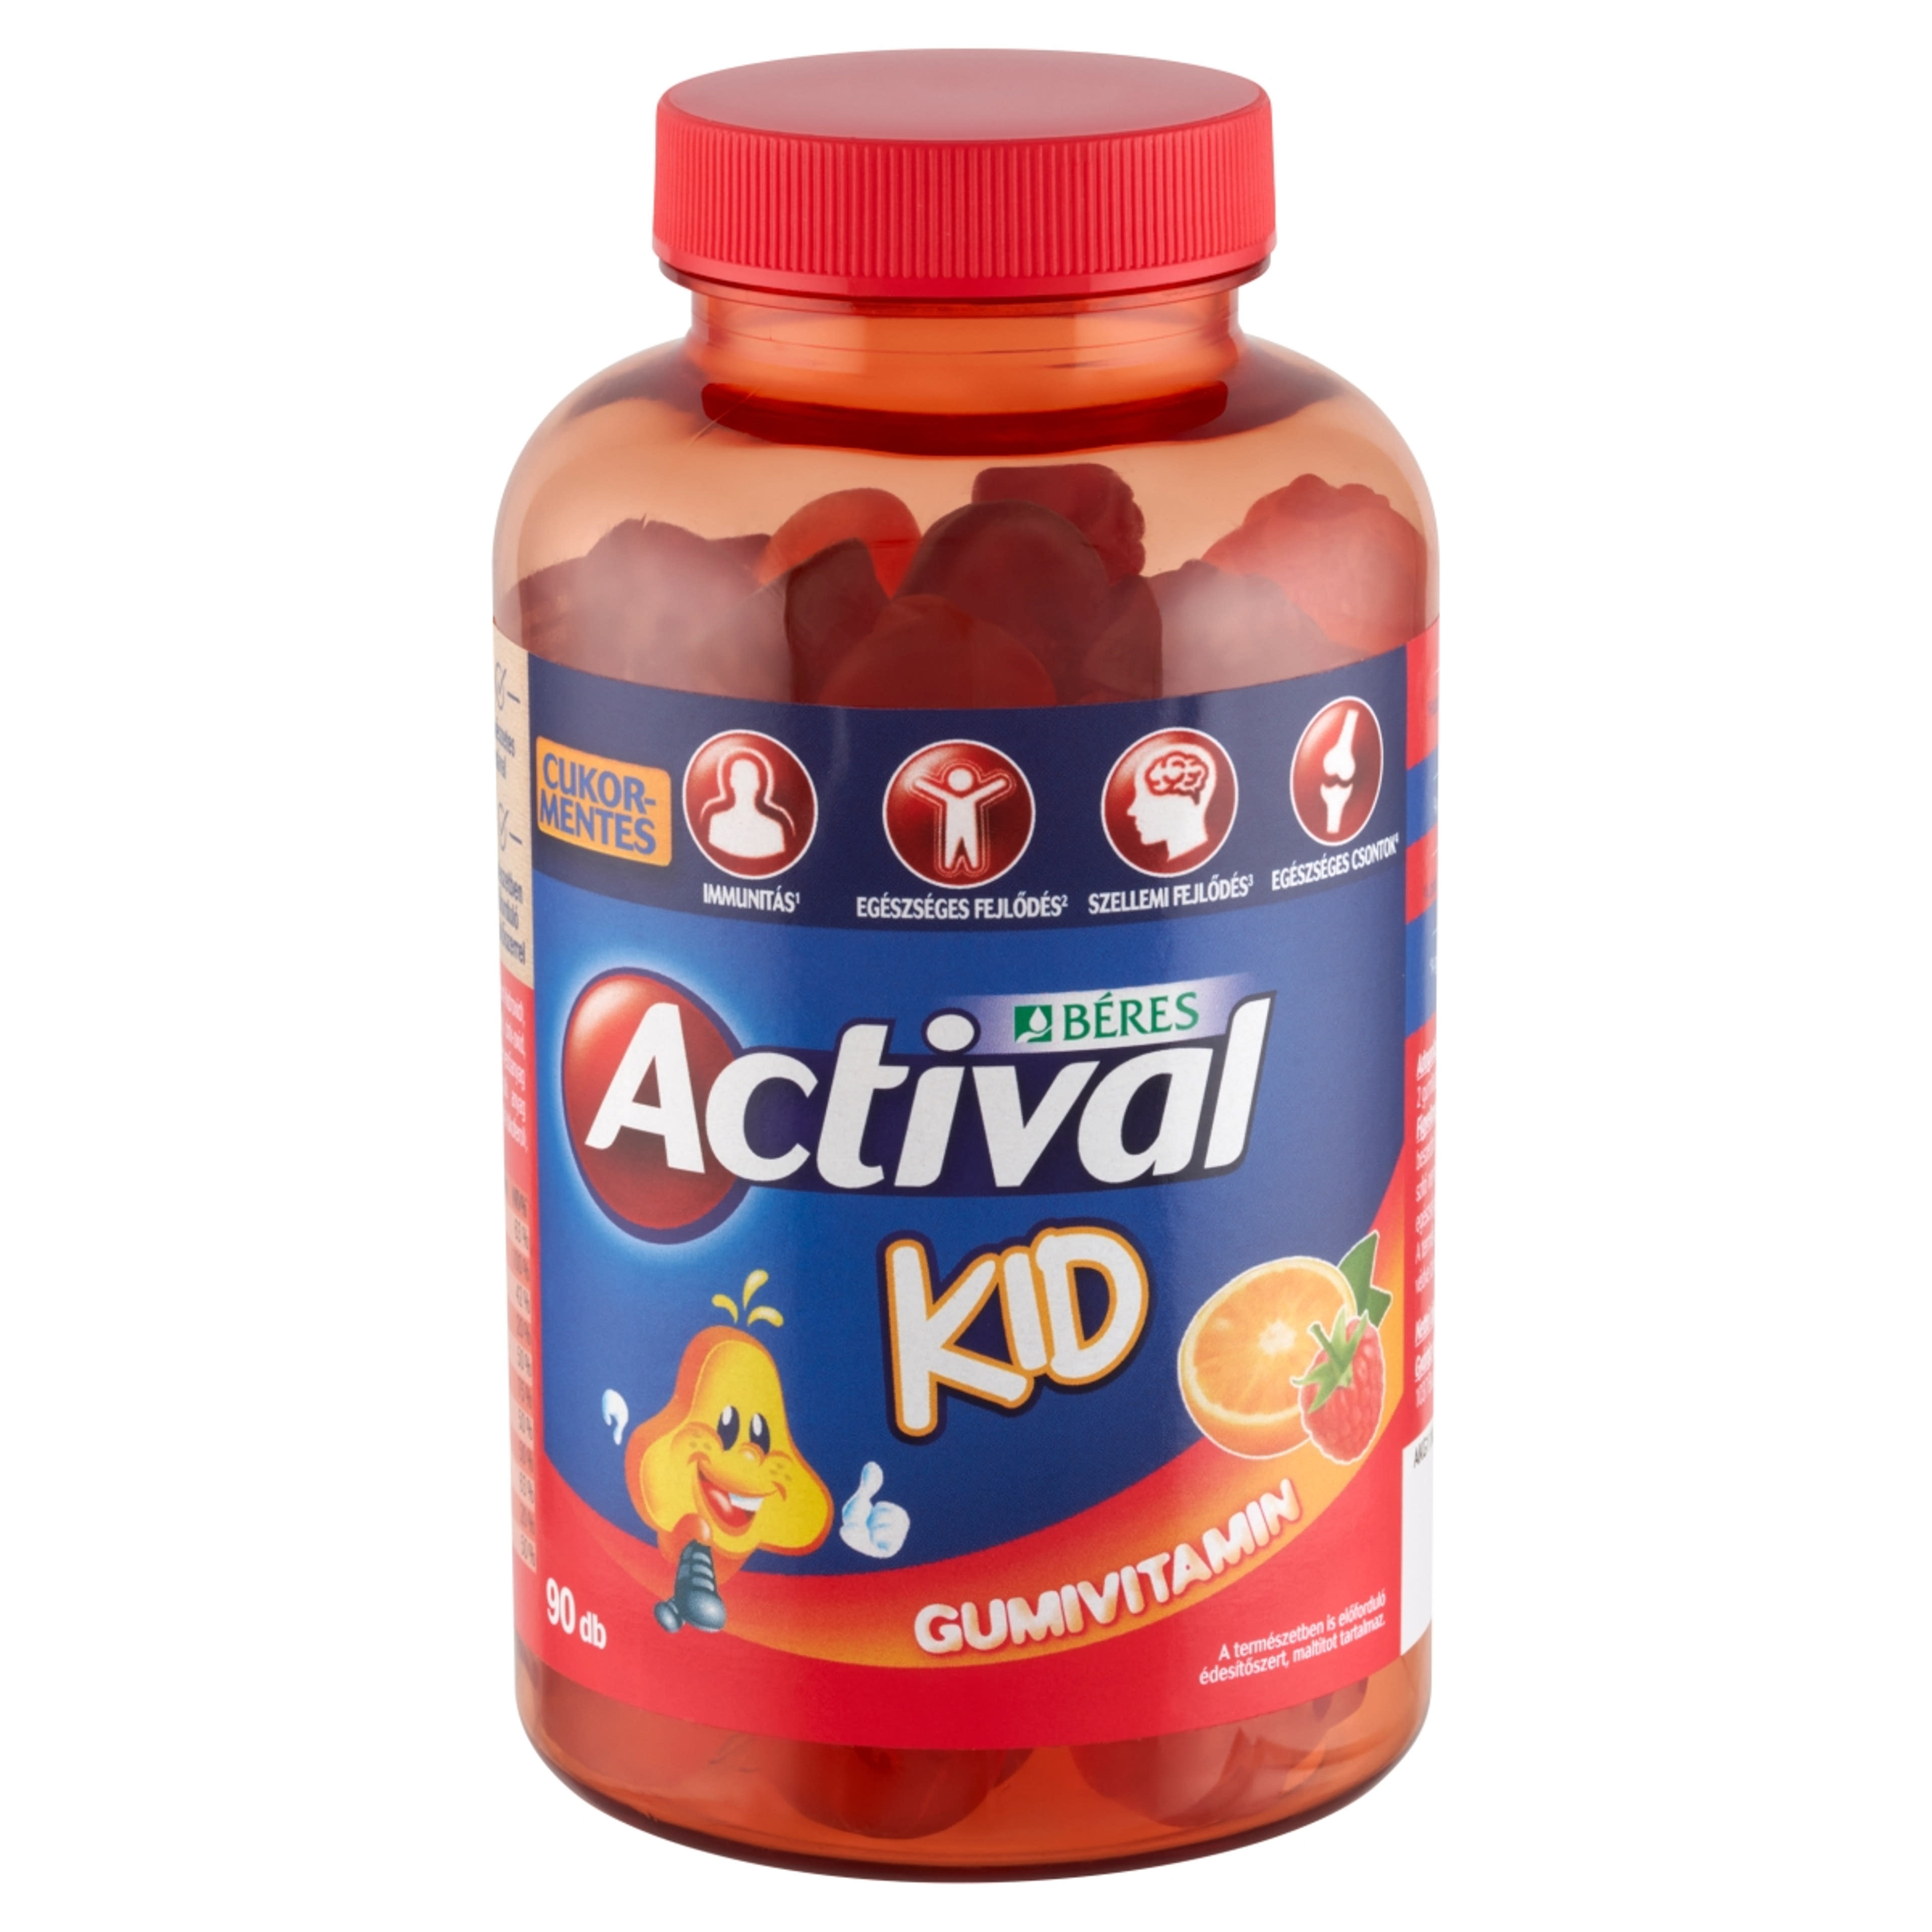 Béres Actival Kid multivitamin gumivitamin narancs és málna ízben - 90 db-3